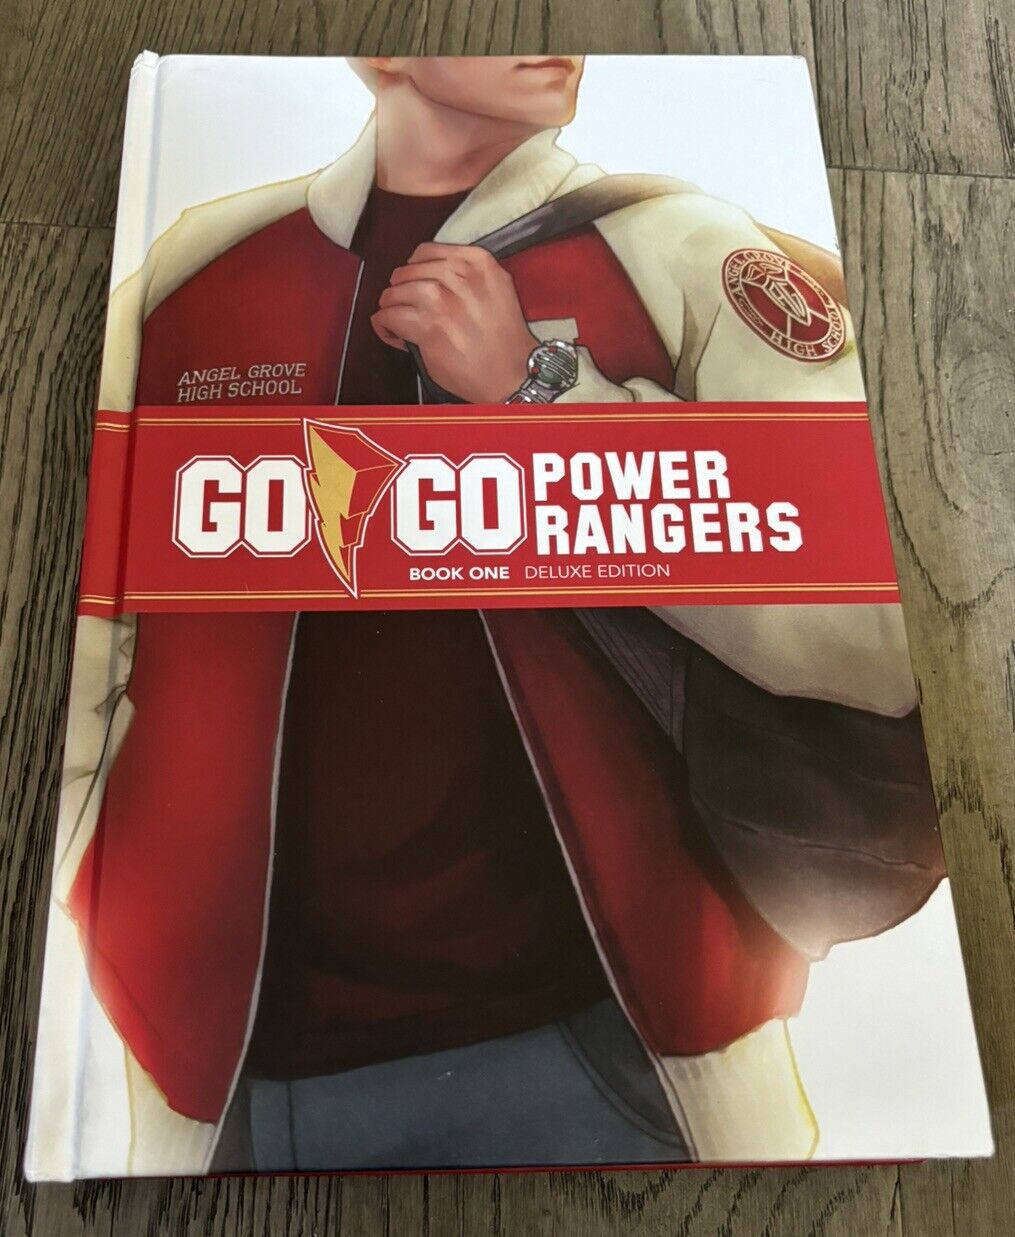 Go Go Power Rangers Book One Deluxe Edition Hardcover BOOM Studios Graphic Novel